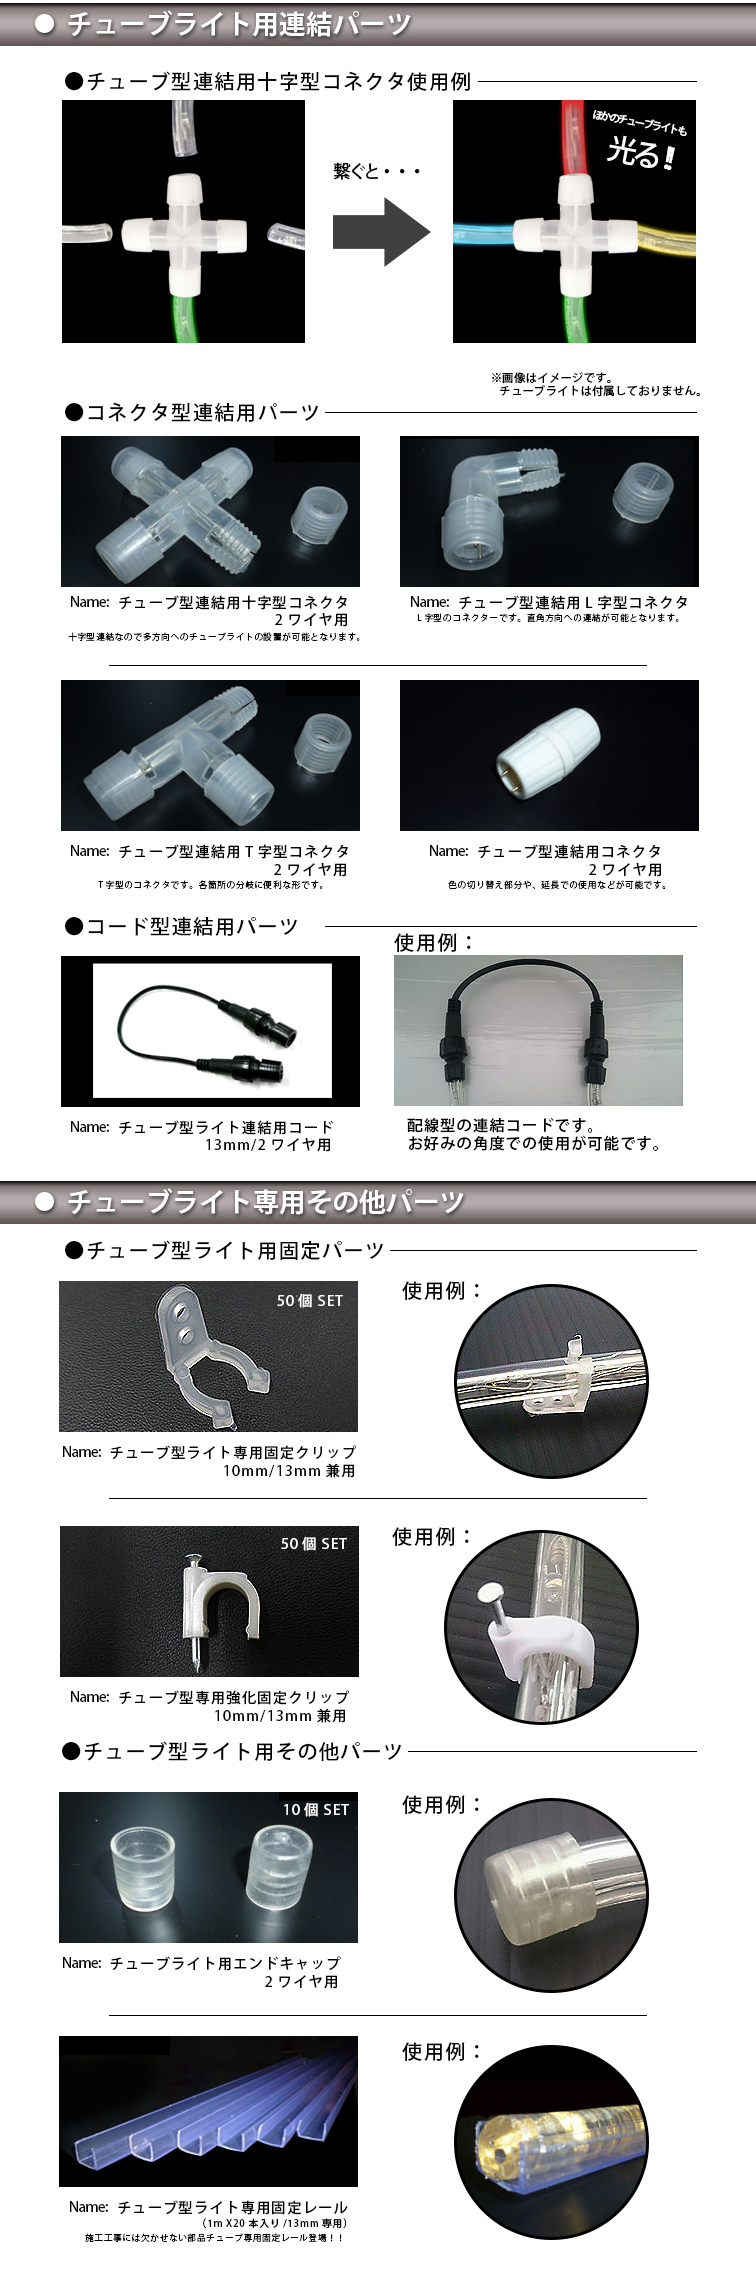 LEDストリングライト イルミネーションライト ワイヤーライト 120LED球 12M USB式 フェアリーライト 写真クリップ 電飾 防水 - 2